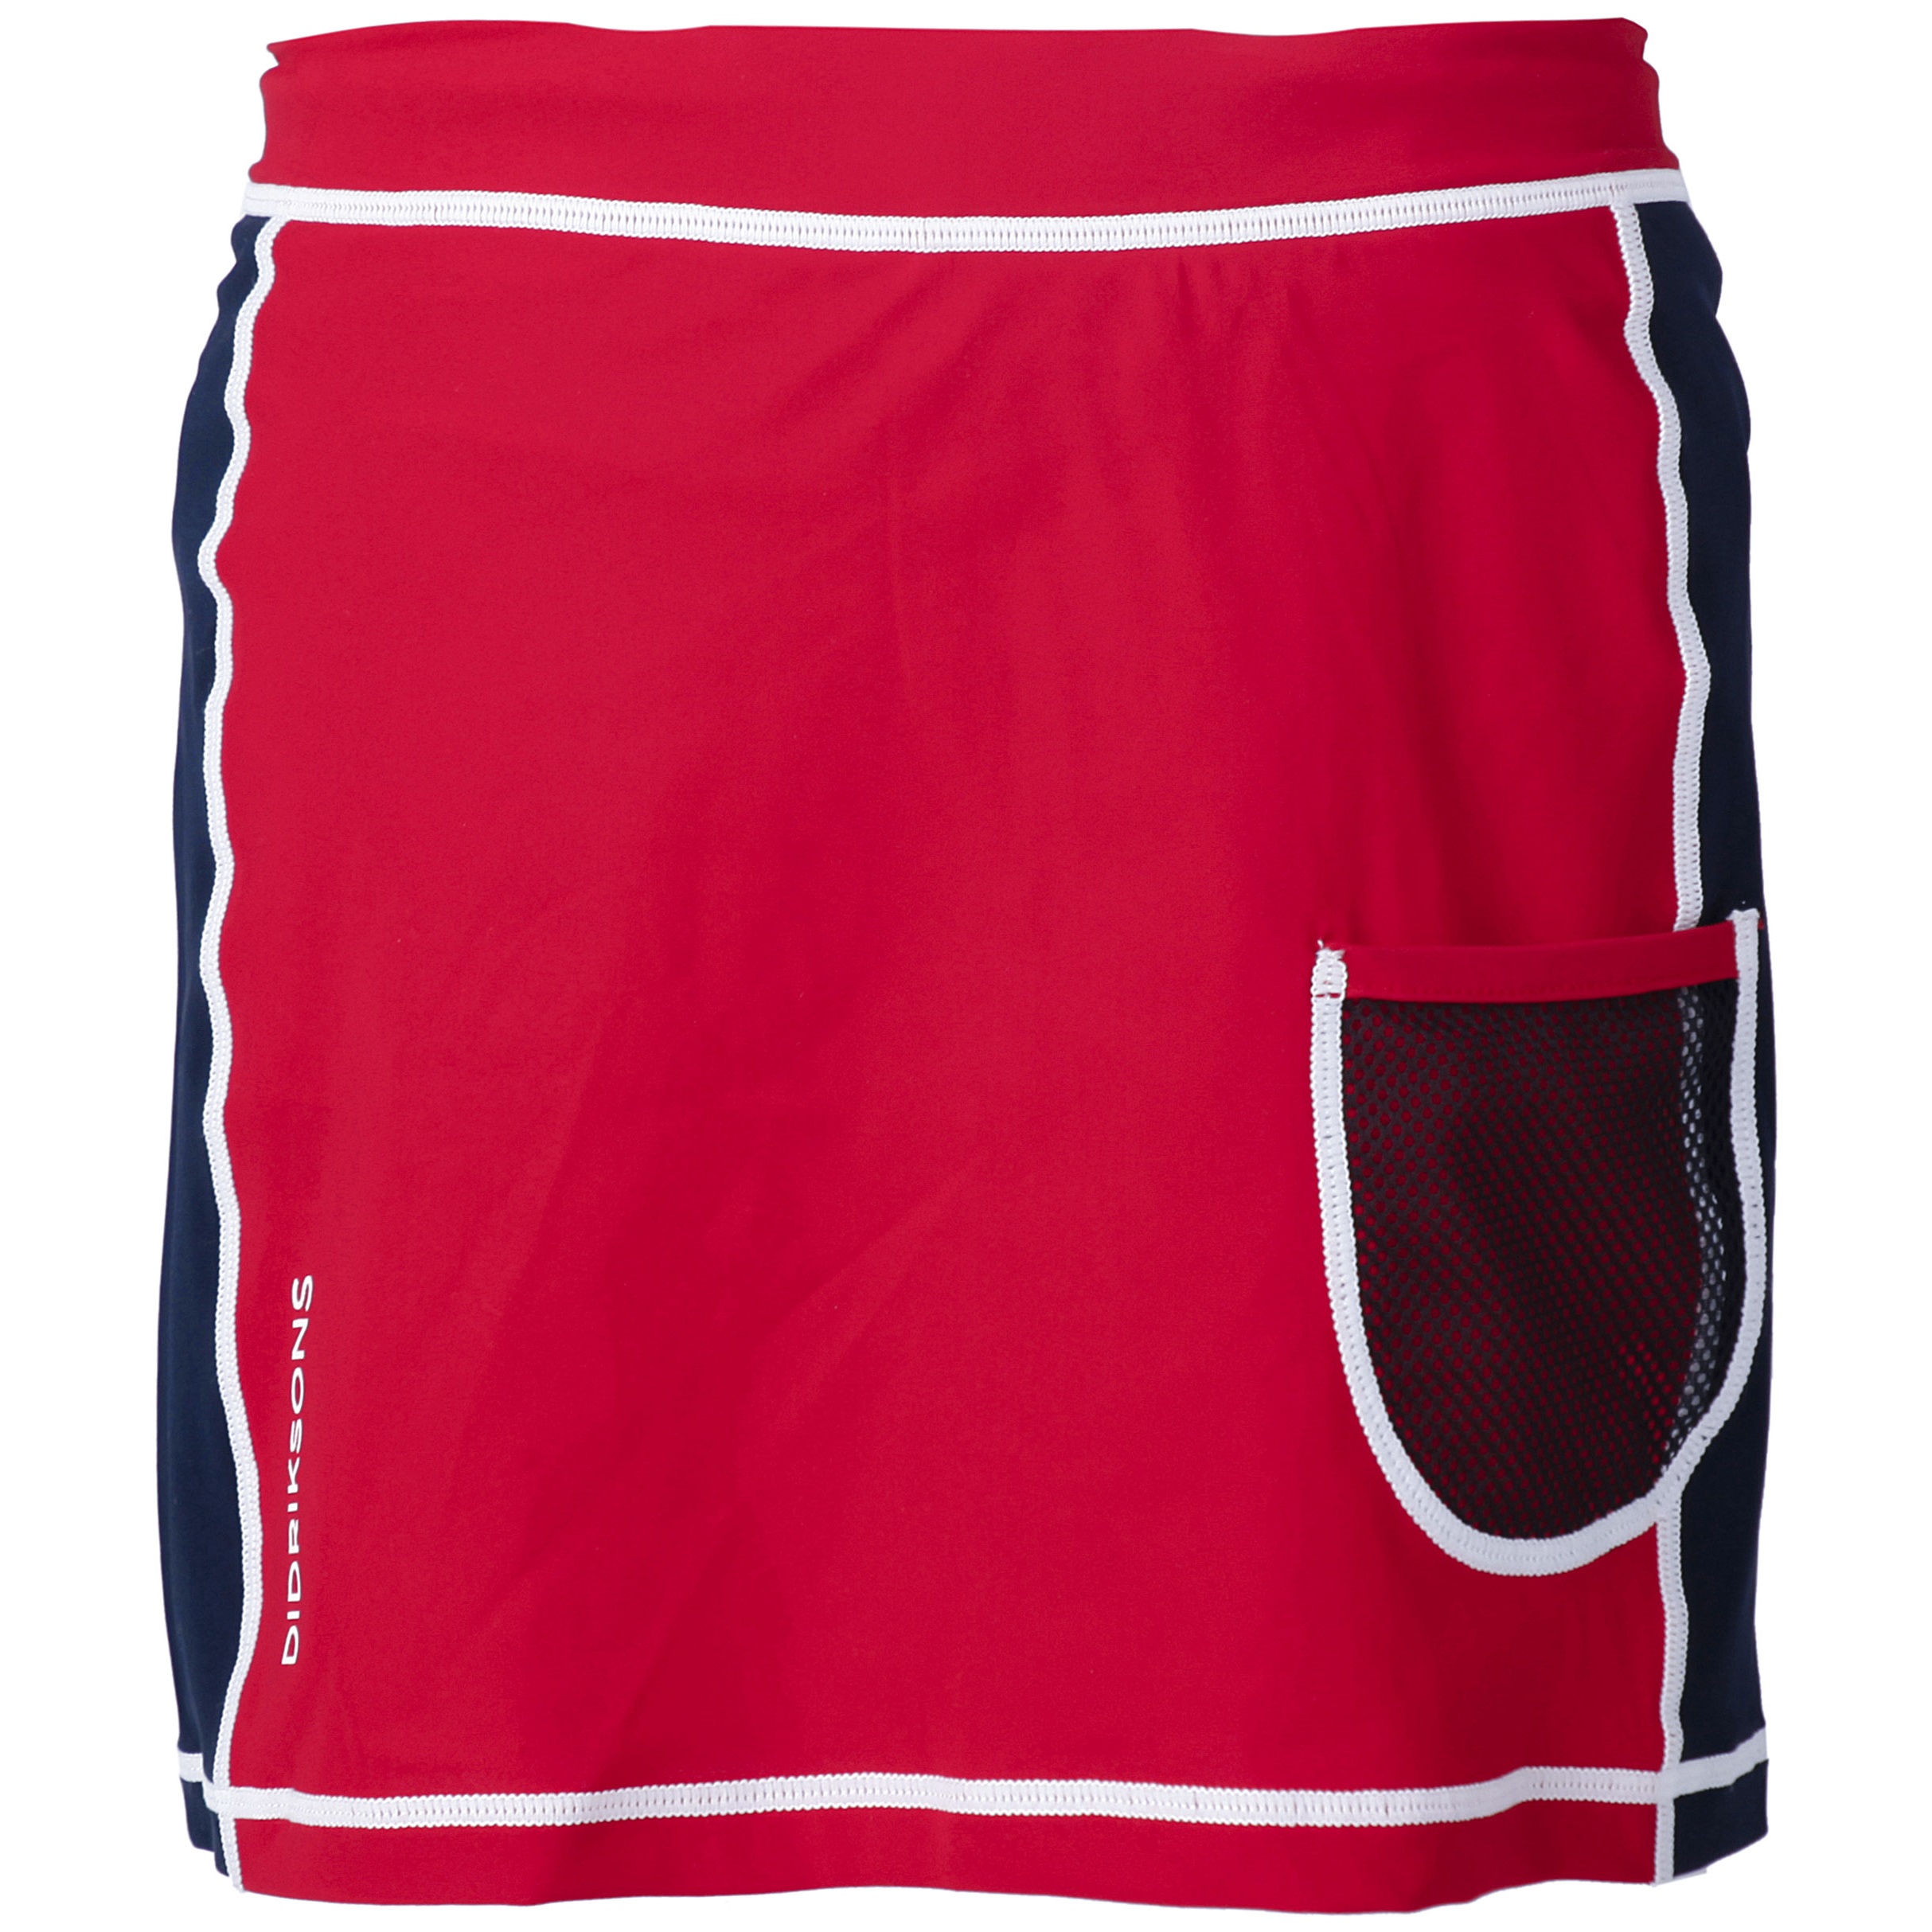 Didriksons Kids’ Coral UV Skirt Chili Red